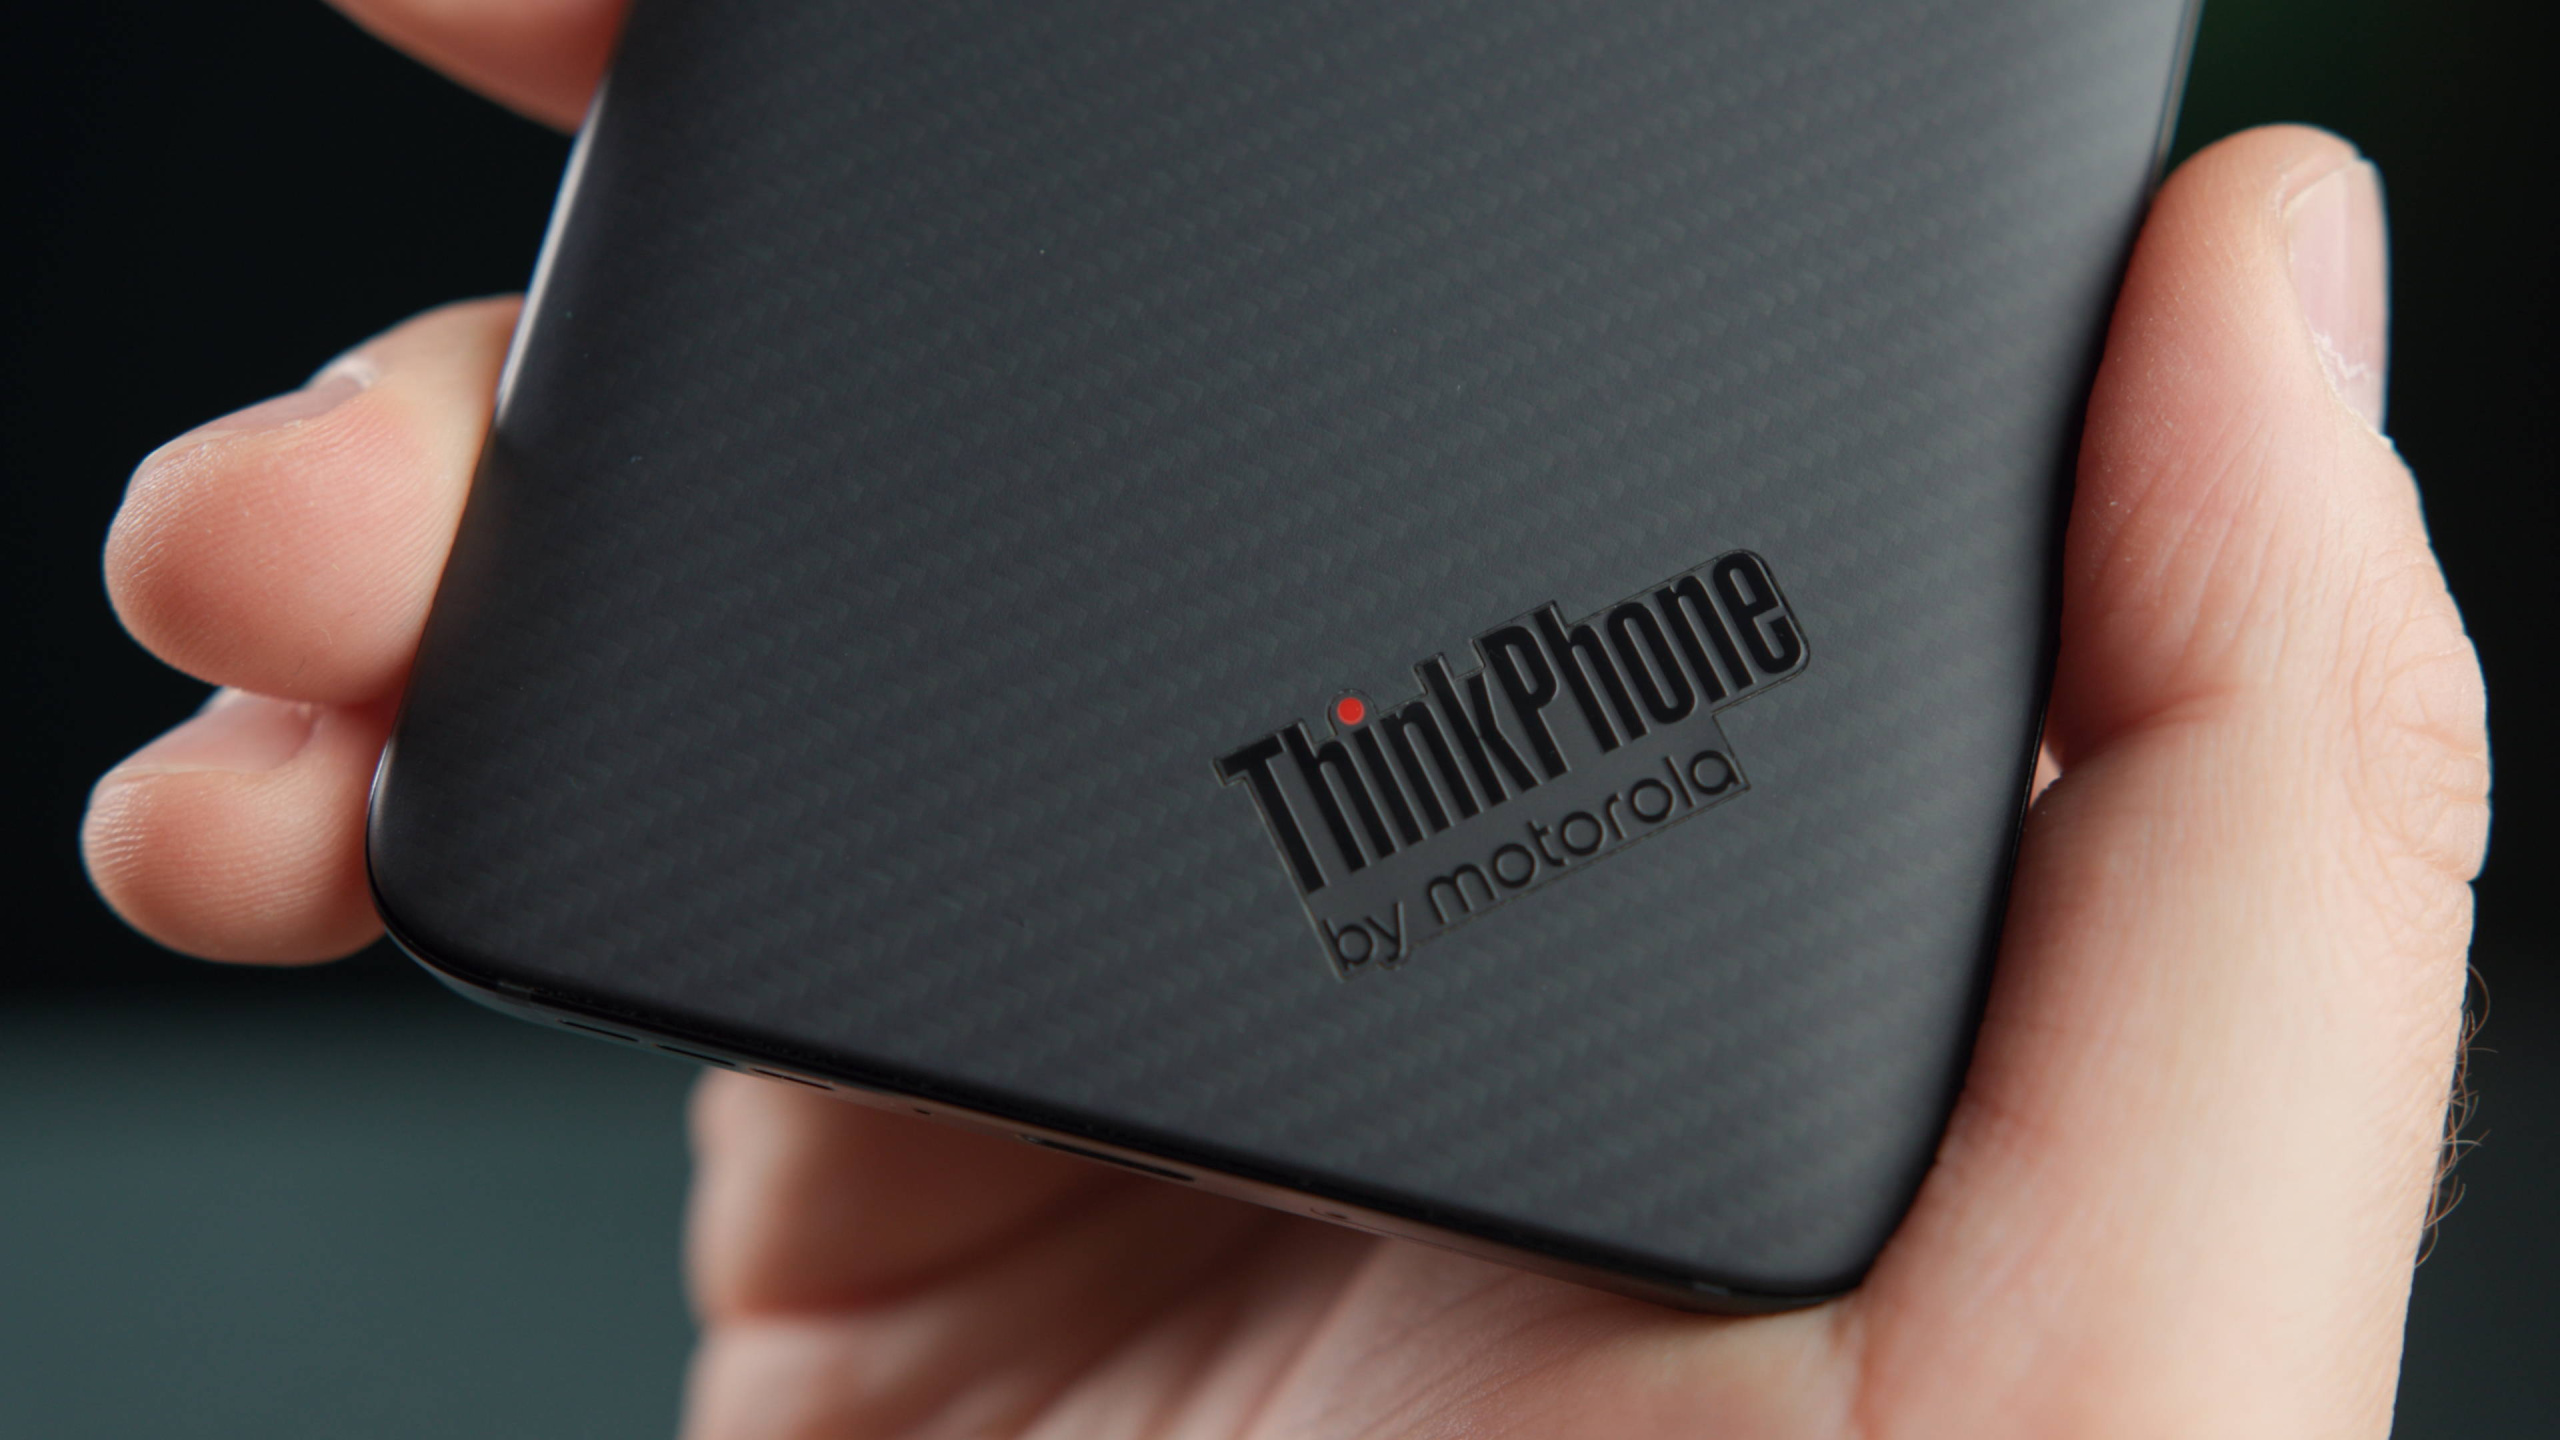 Motorola ThinkPhone Enhances Key Business Features